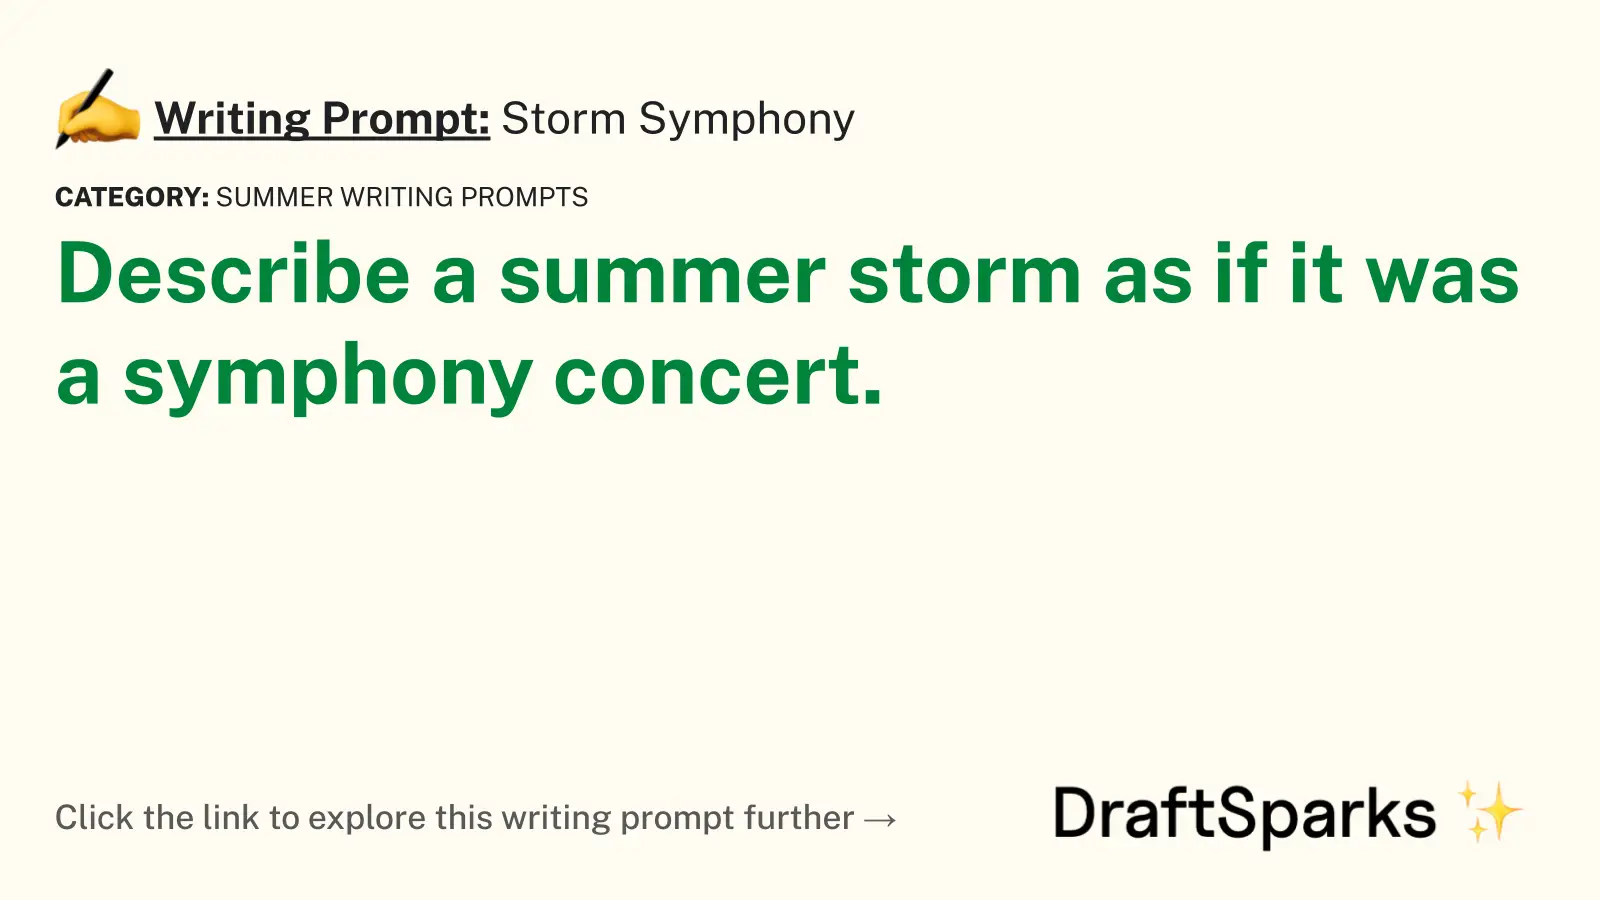 Storm Symphony